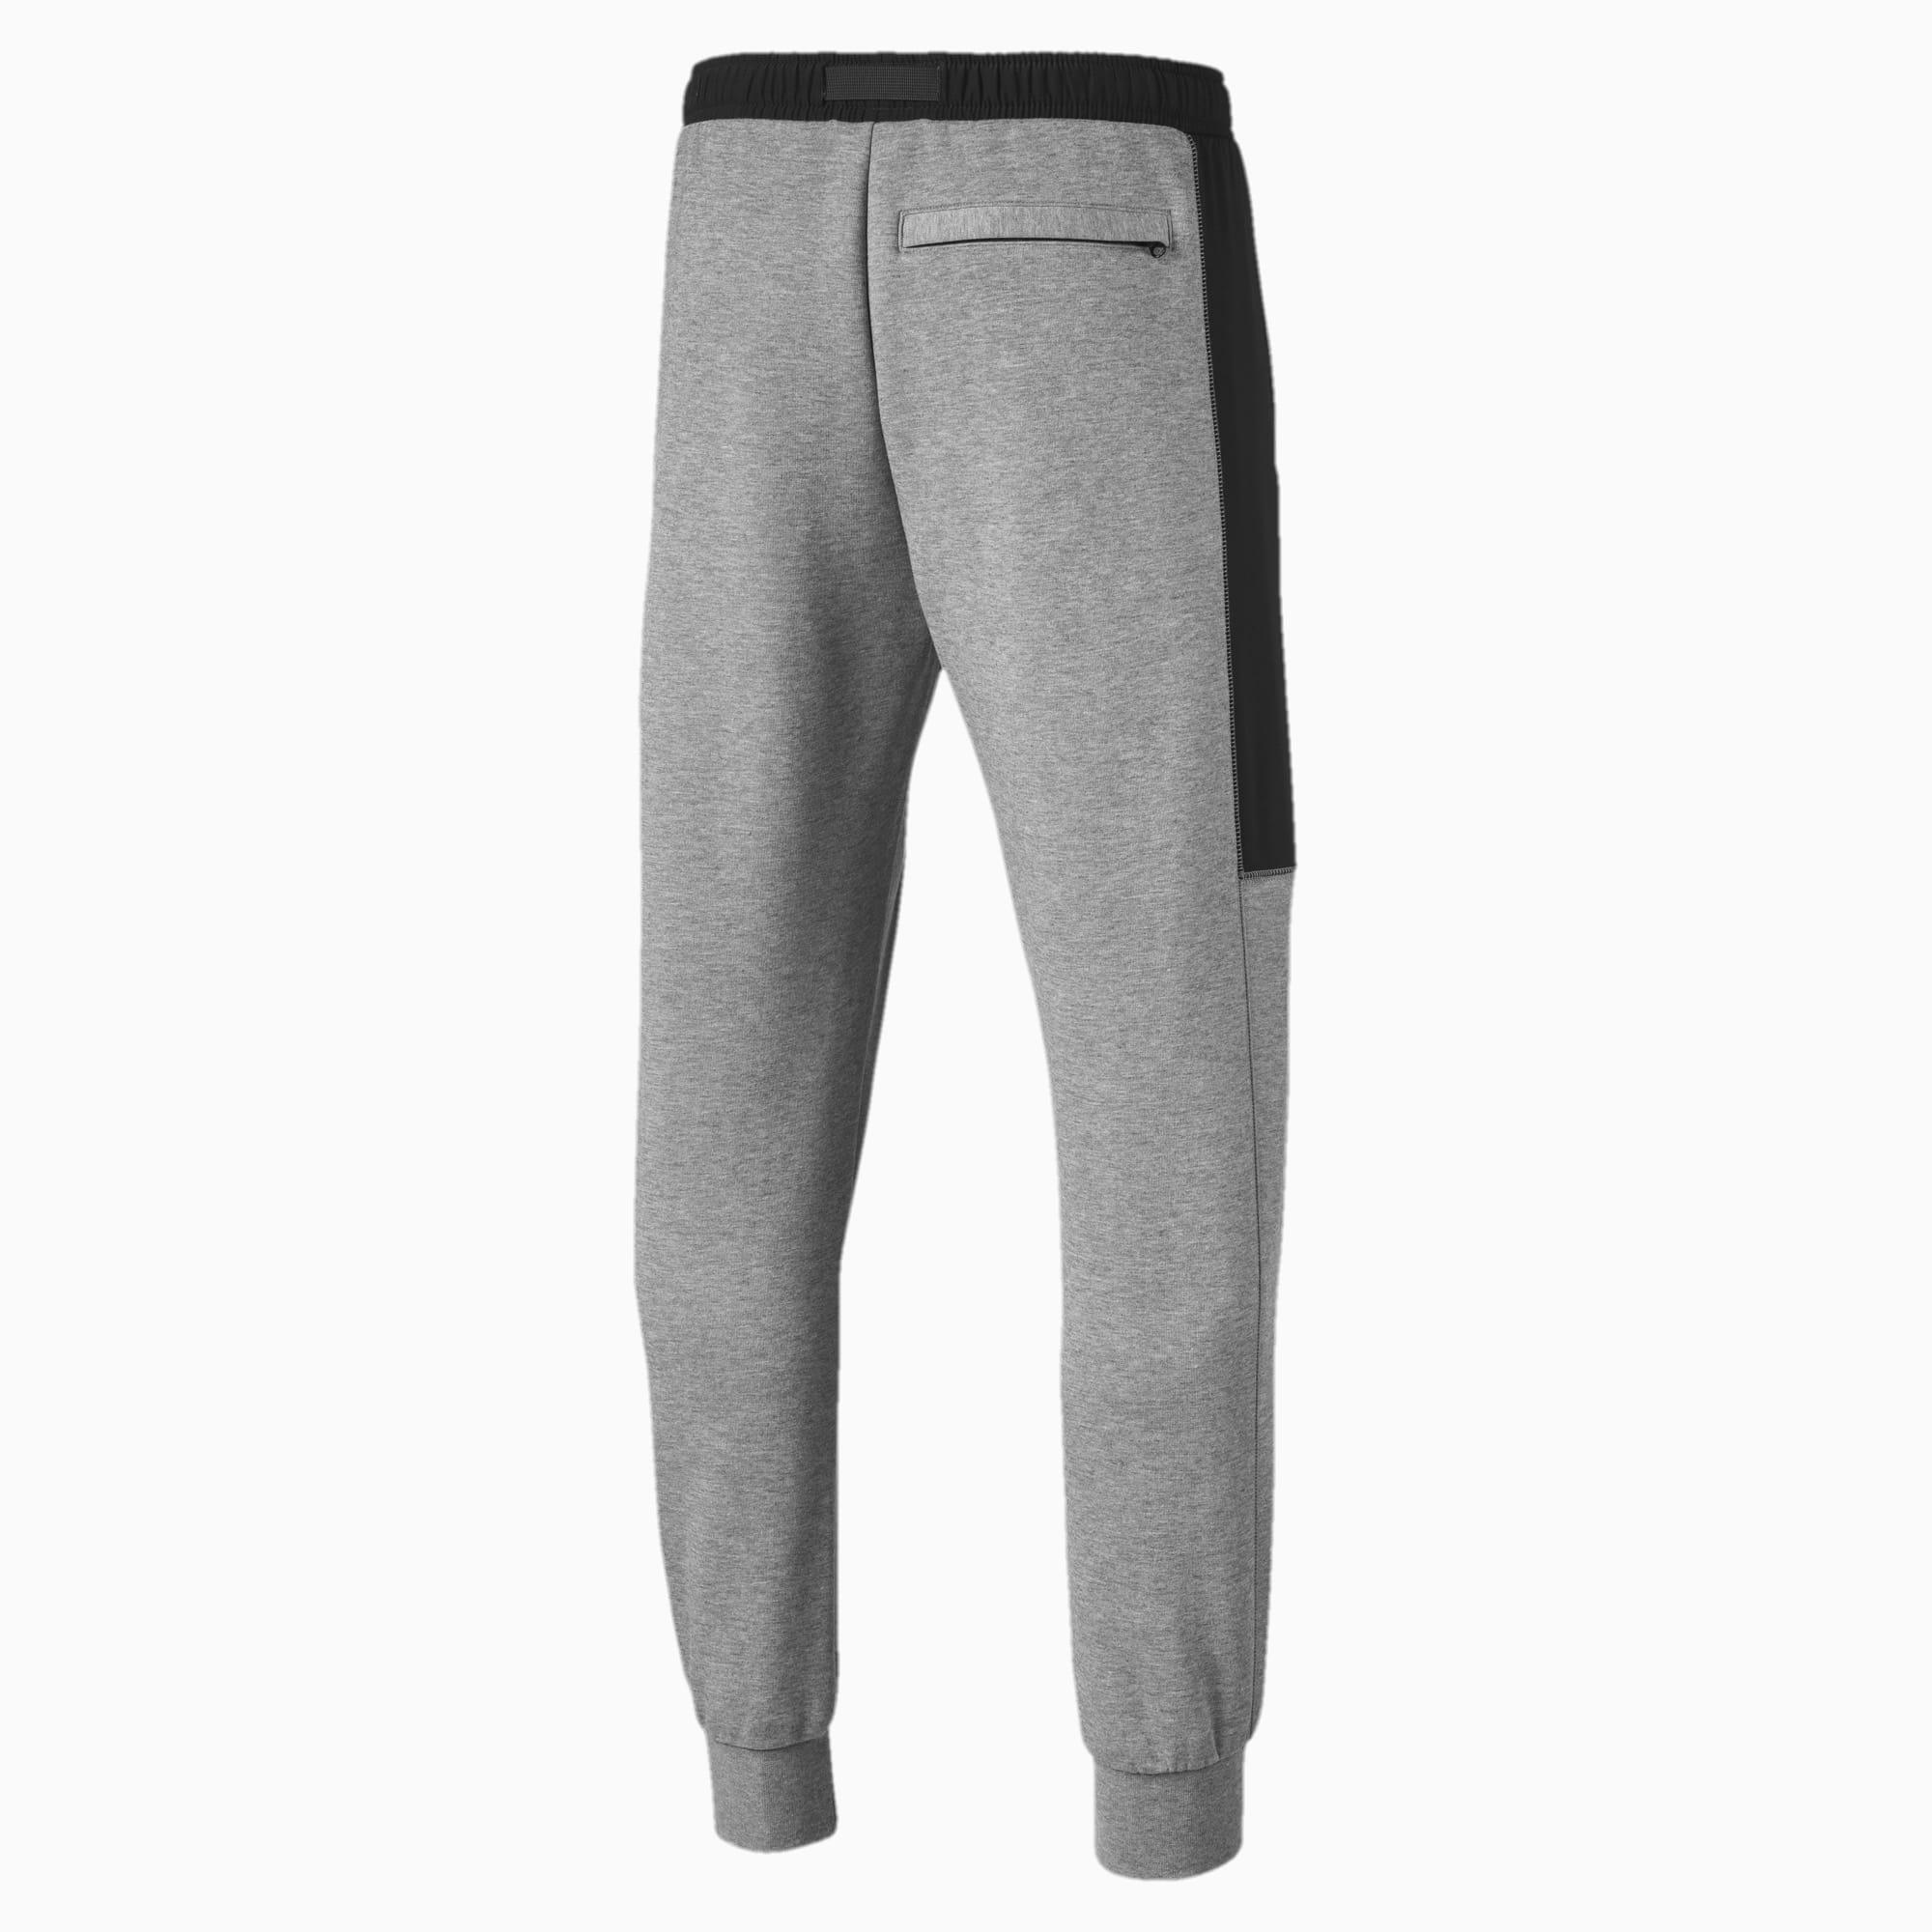 PUMA Cotton Epoch Hybrid Men's Sweatpants in 03 (Gray) for Men - Save ...